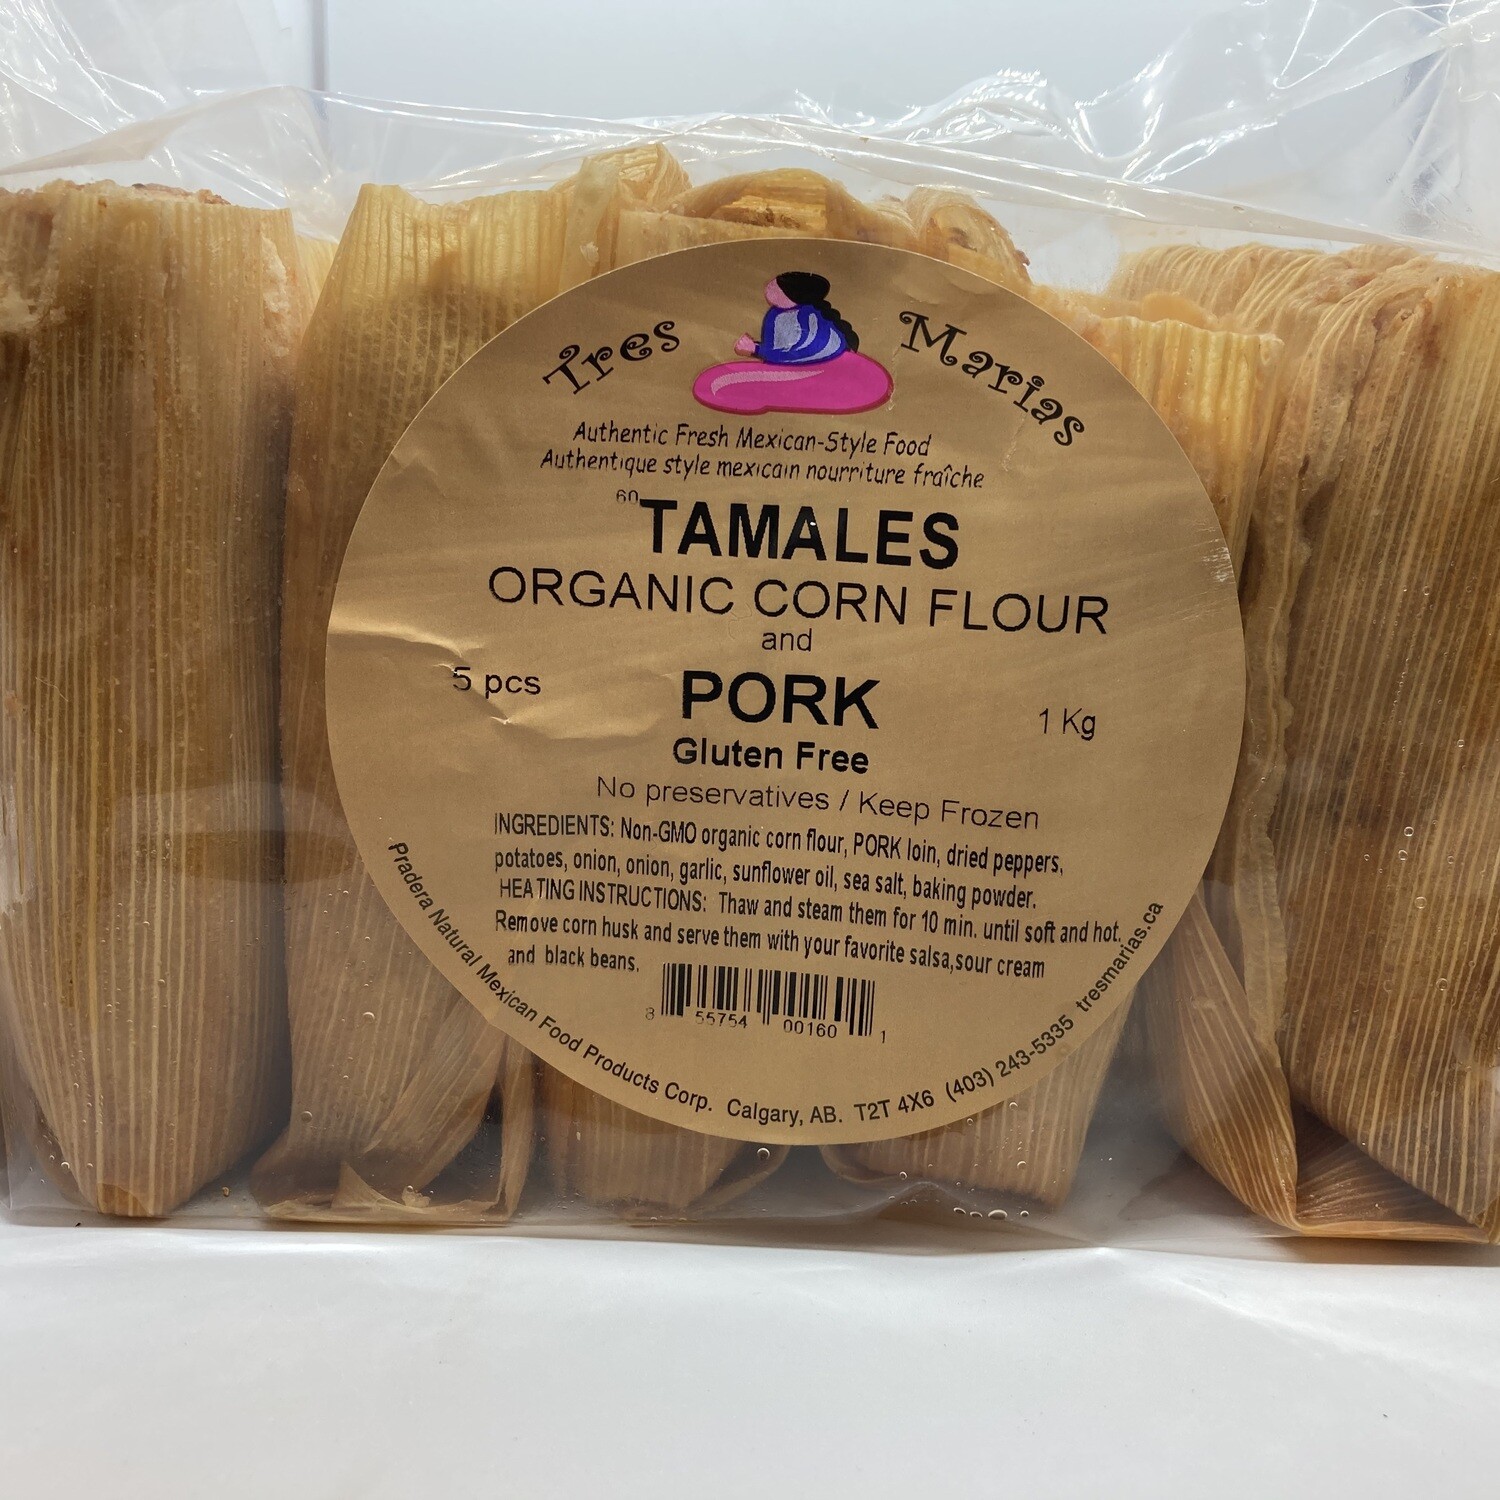 Tamales Organic Corn Flour & Pork 5pcs